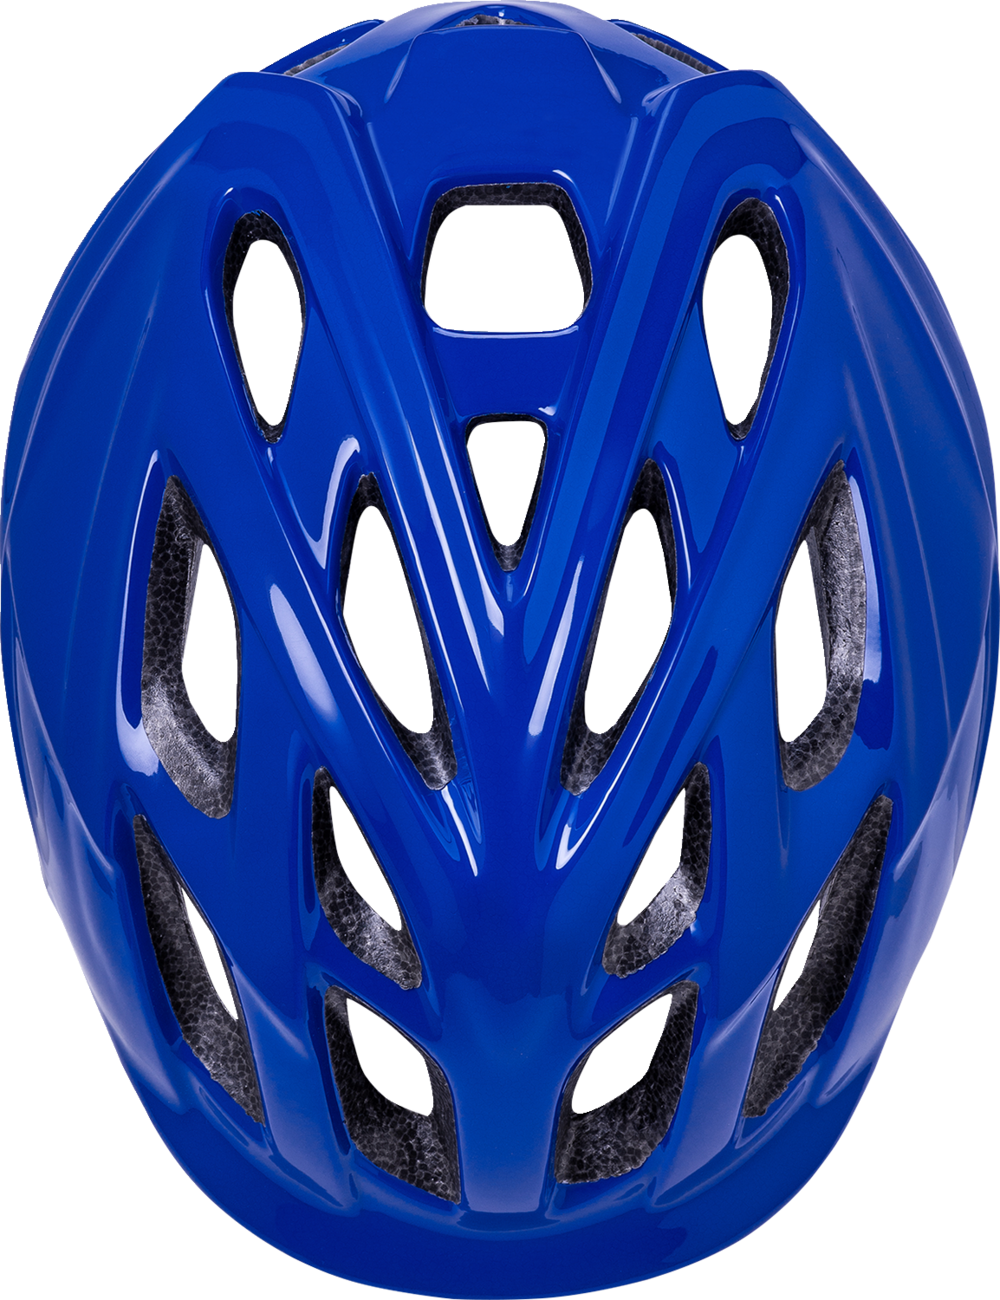 KALI Child Chakra Helmet - Blue - Small 0221021115